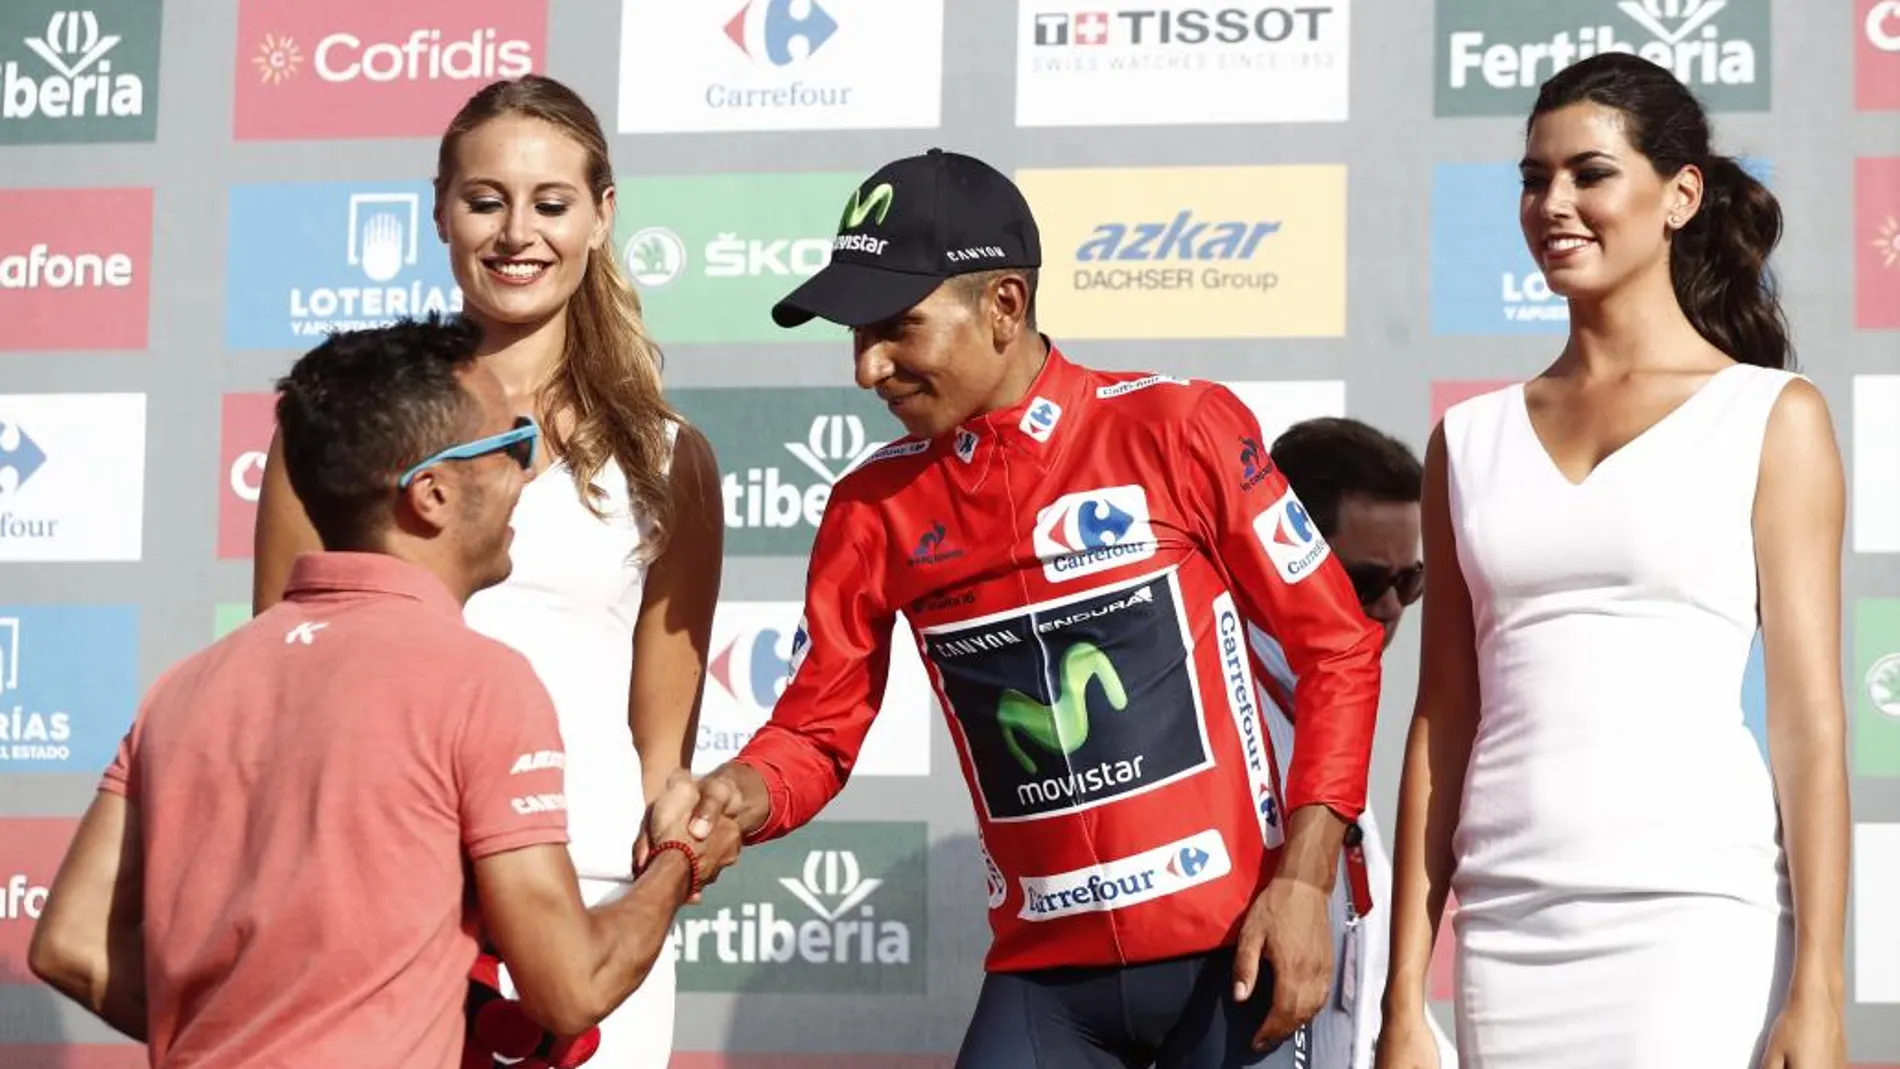 El ciclista colombiano del equipo Movistar, Nairo Quintana, en el podium recibe la mascota de la Vuelta de manos del exciclista Joaquim "Purito"Rodríguez